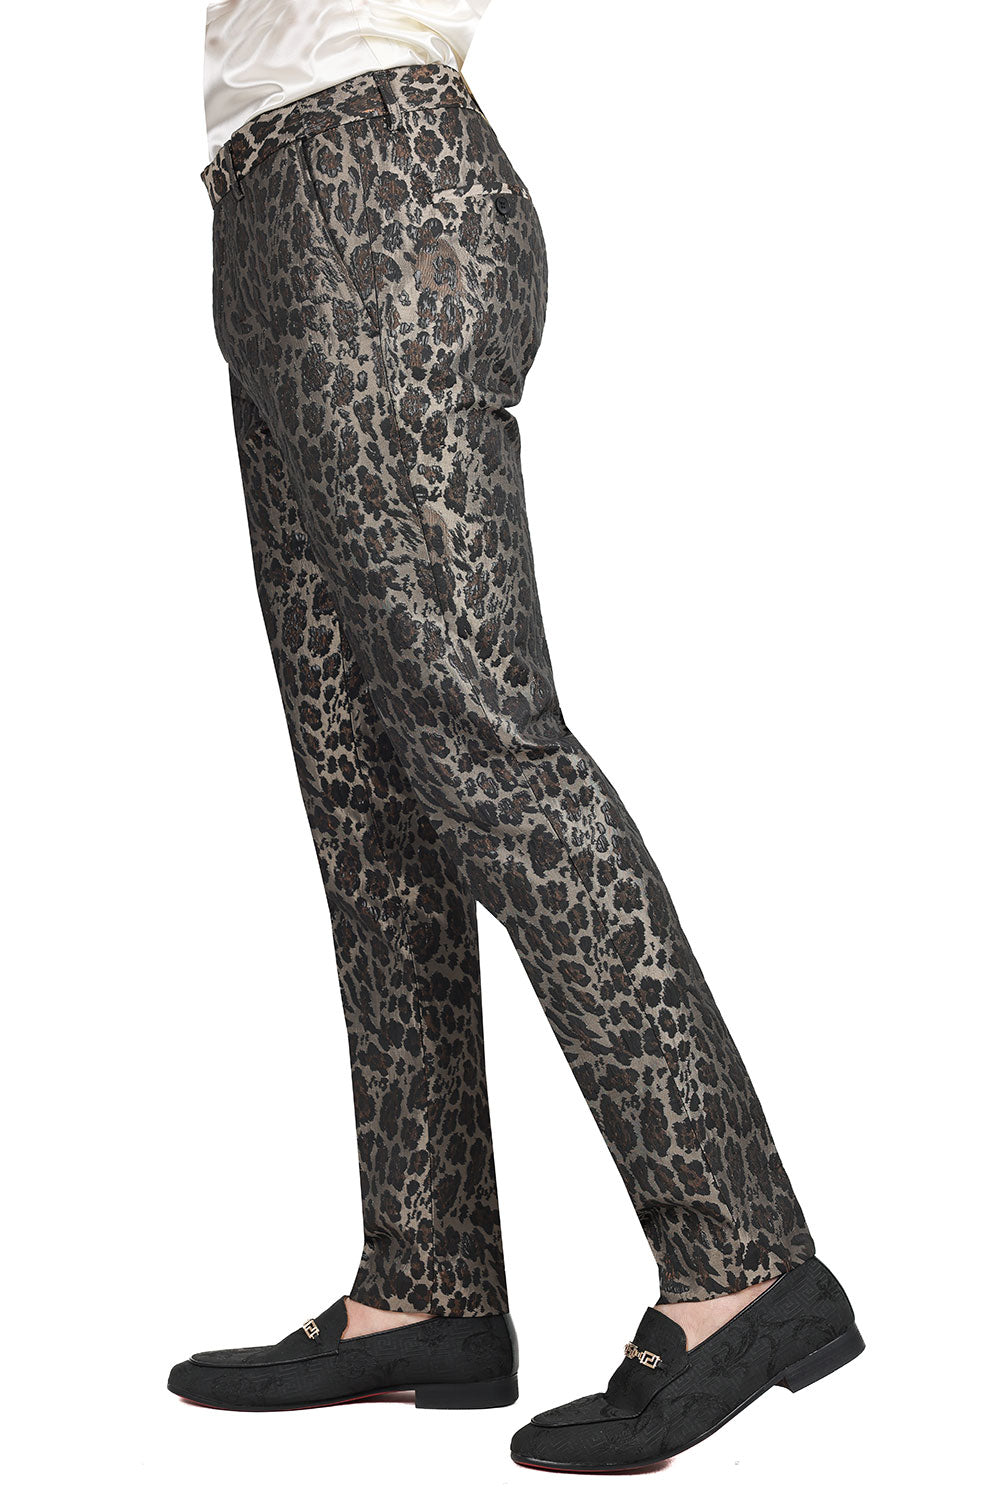 BARABAS Men's Metallic Shinny Leopard Printed Chino Pants 3CP01Chocolate